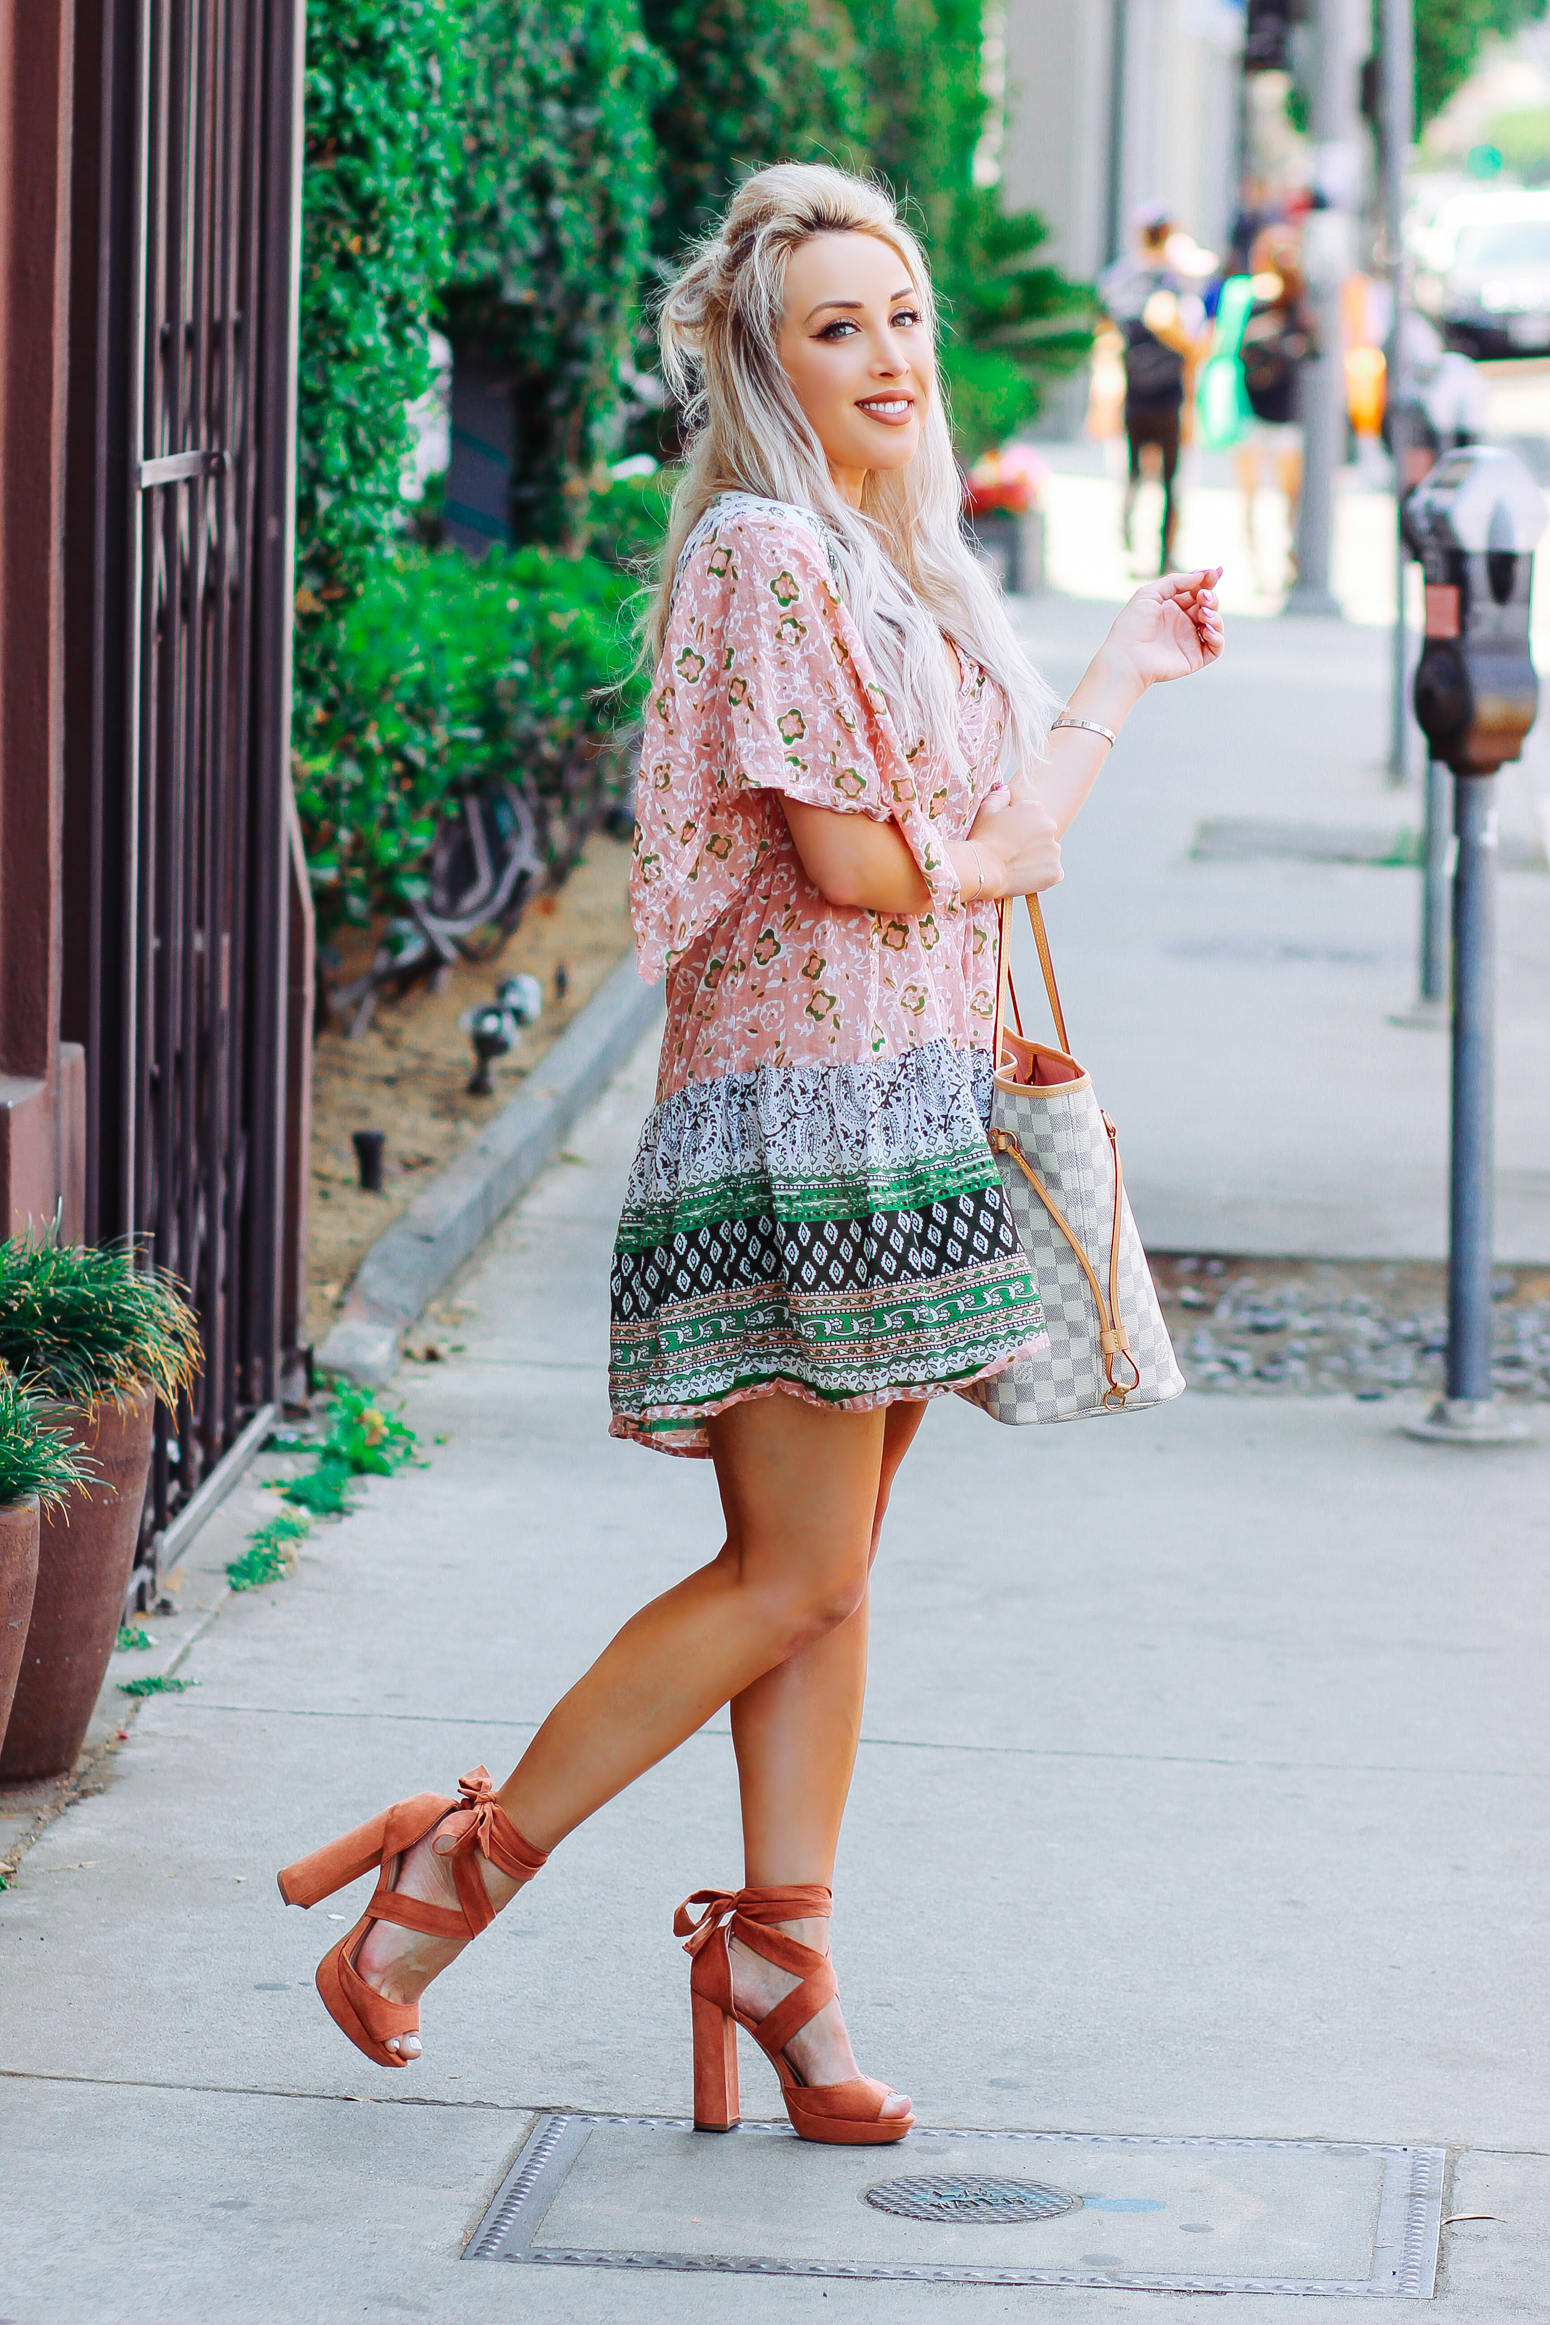 Blondie in the City | Boho Style Dress @LavishGOLD